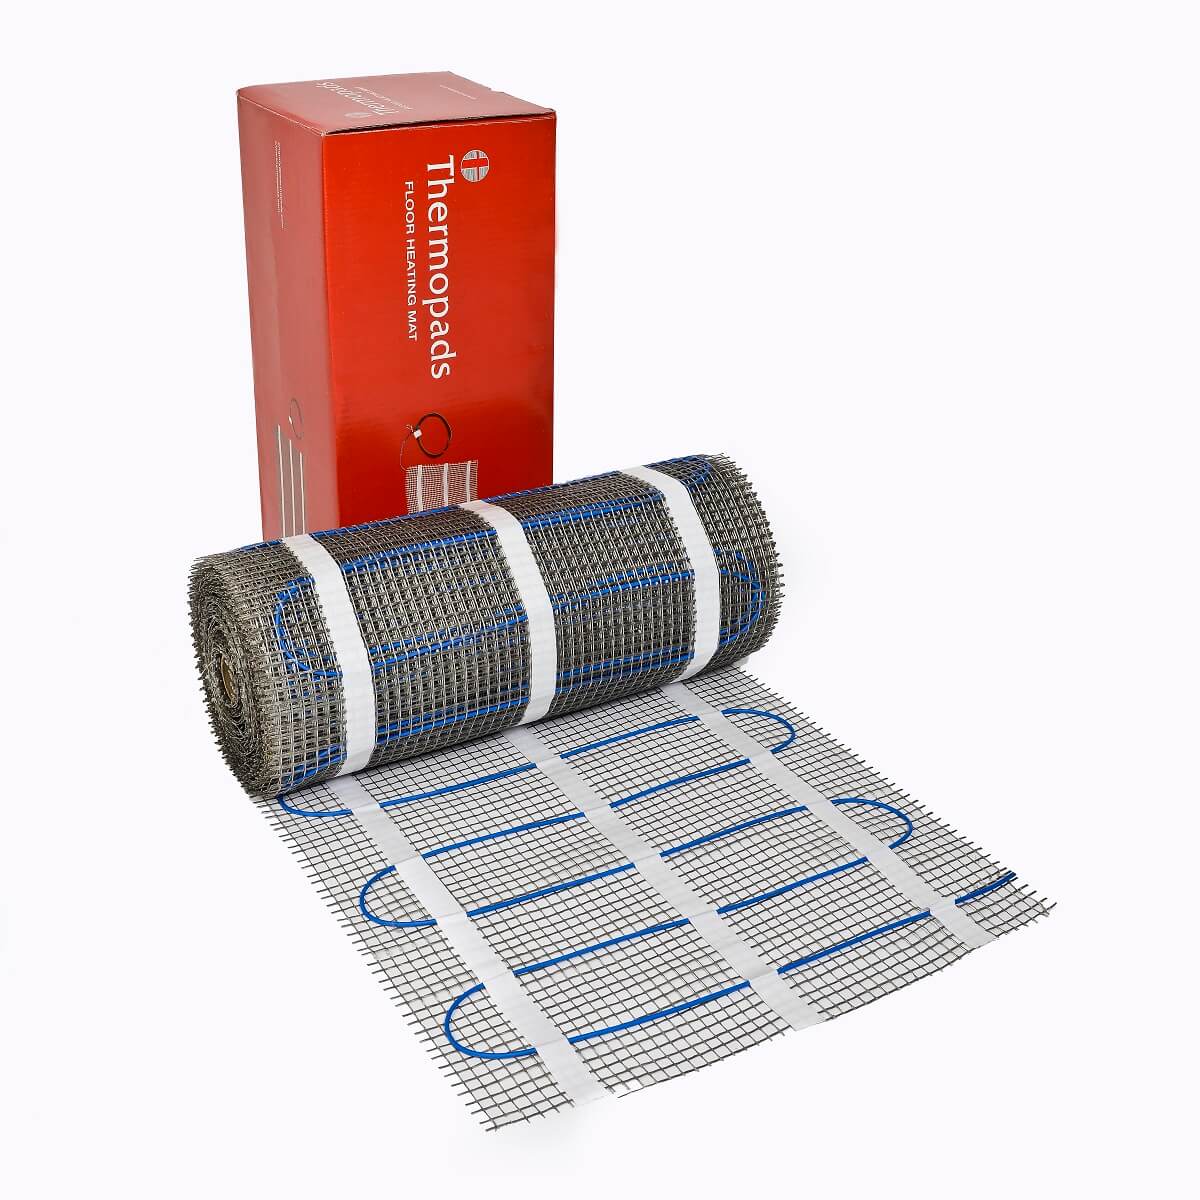 Thermopads Undertile Heating Mat - 6m2 1200W (11178)